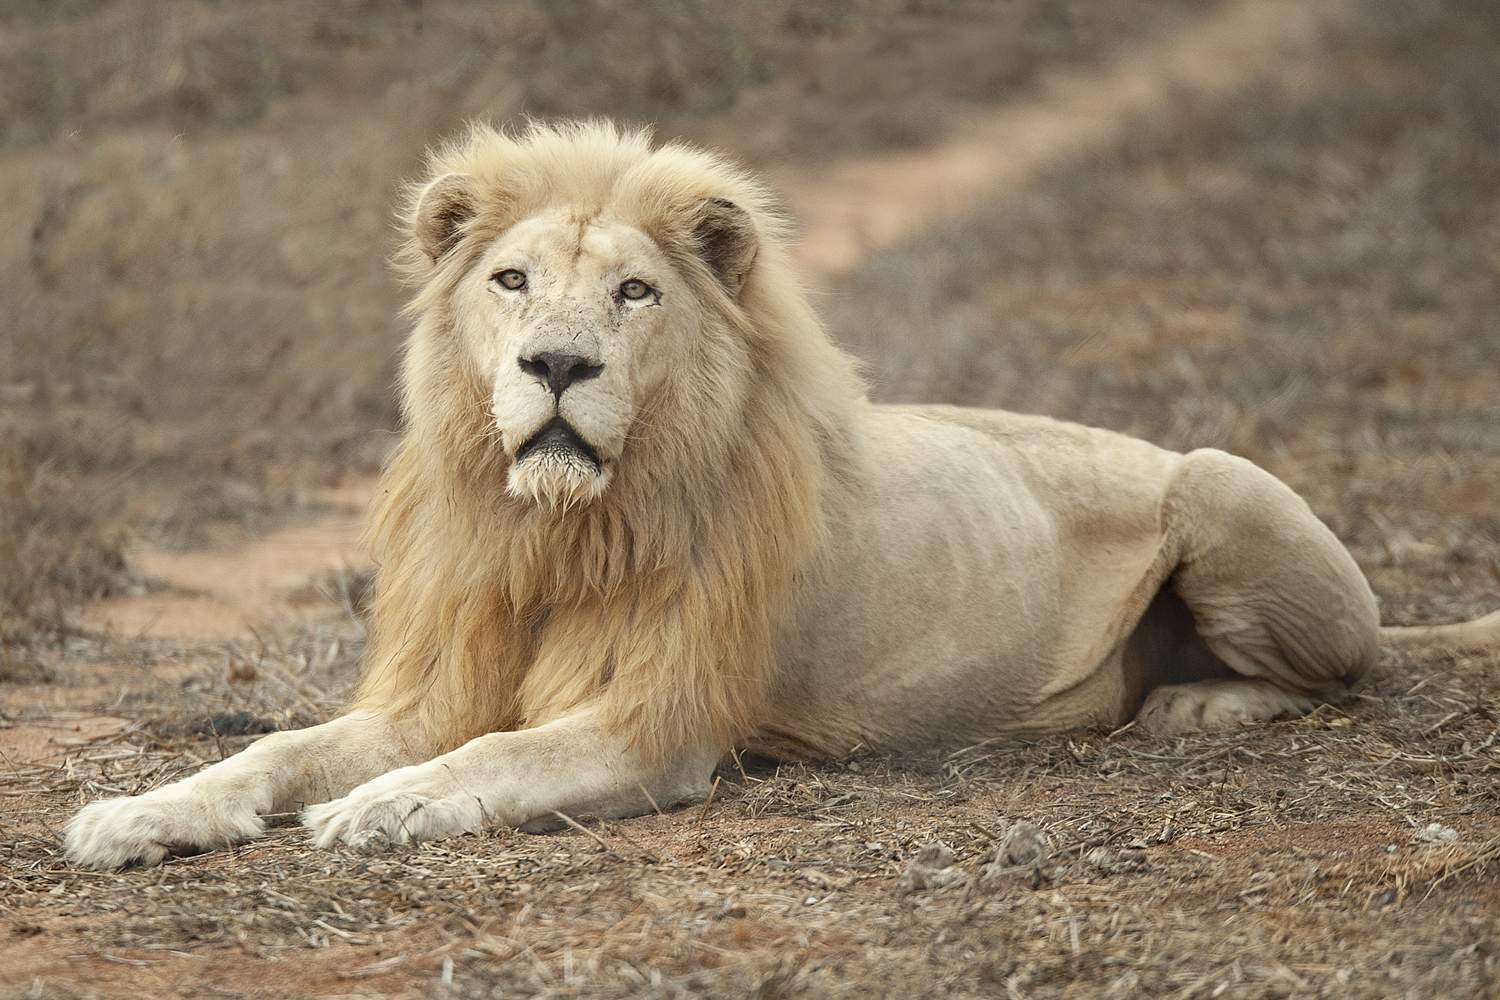 Regeus - Global White Lion Protection Trust